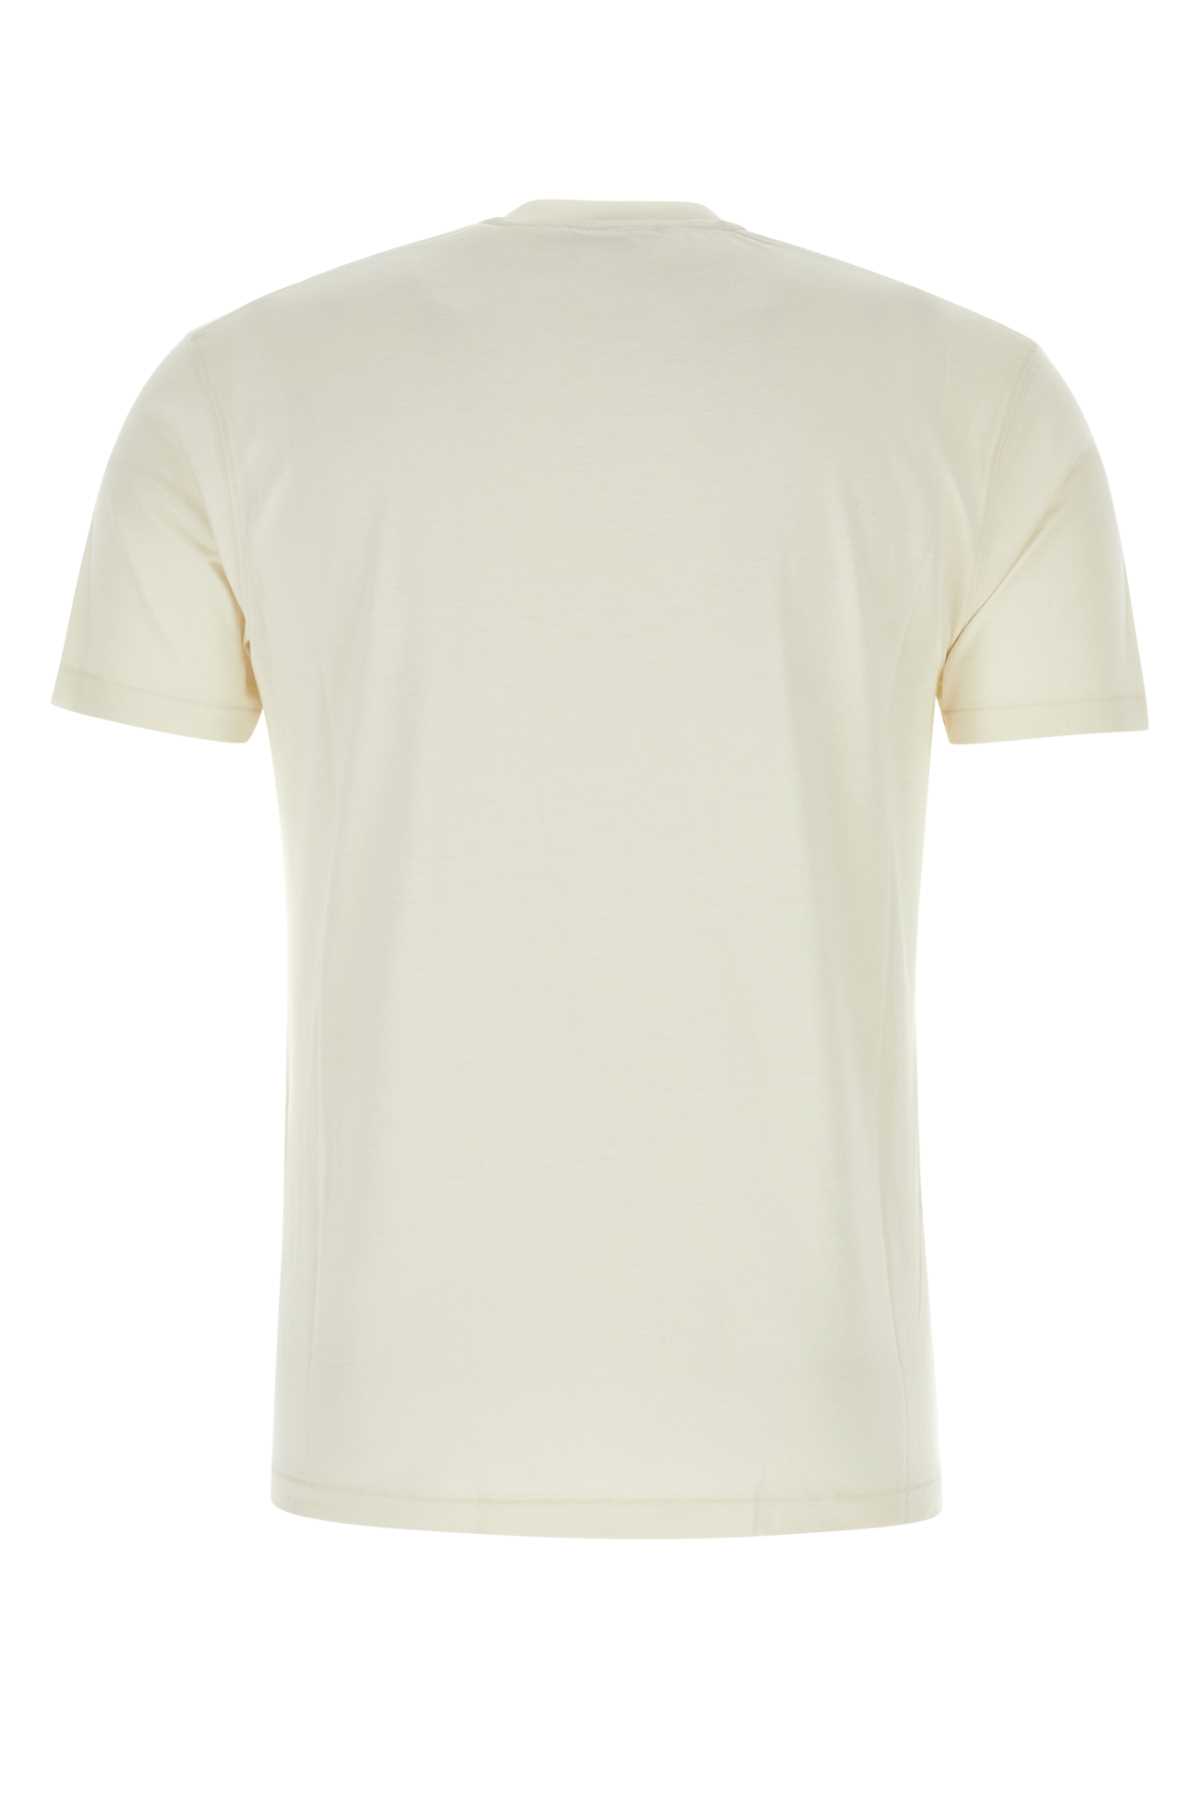 Tom Ford Sand Lyocell Blend T-shirt In Ecru